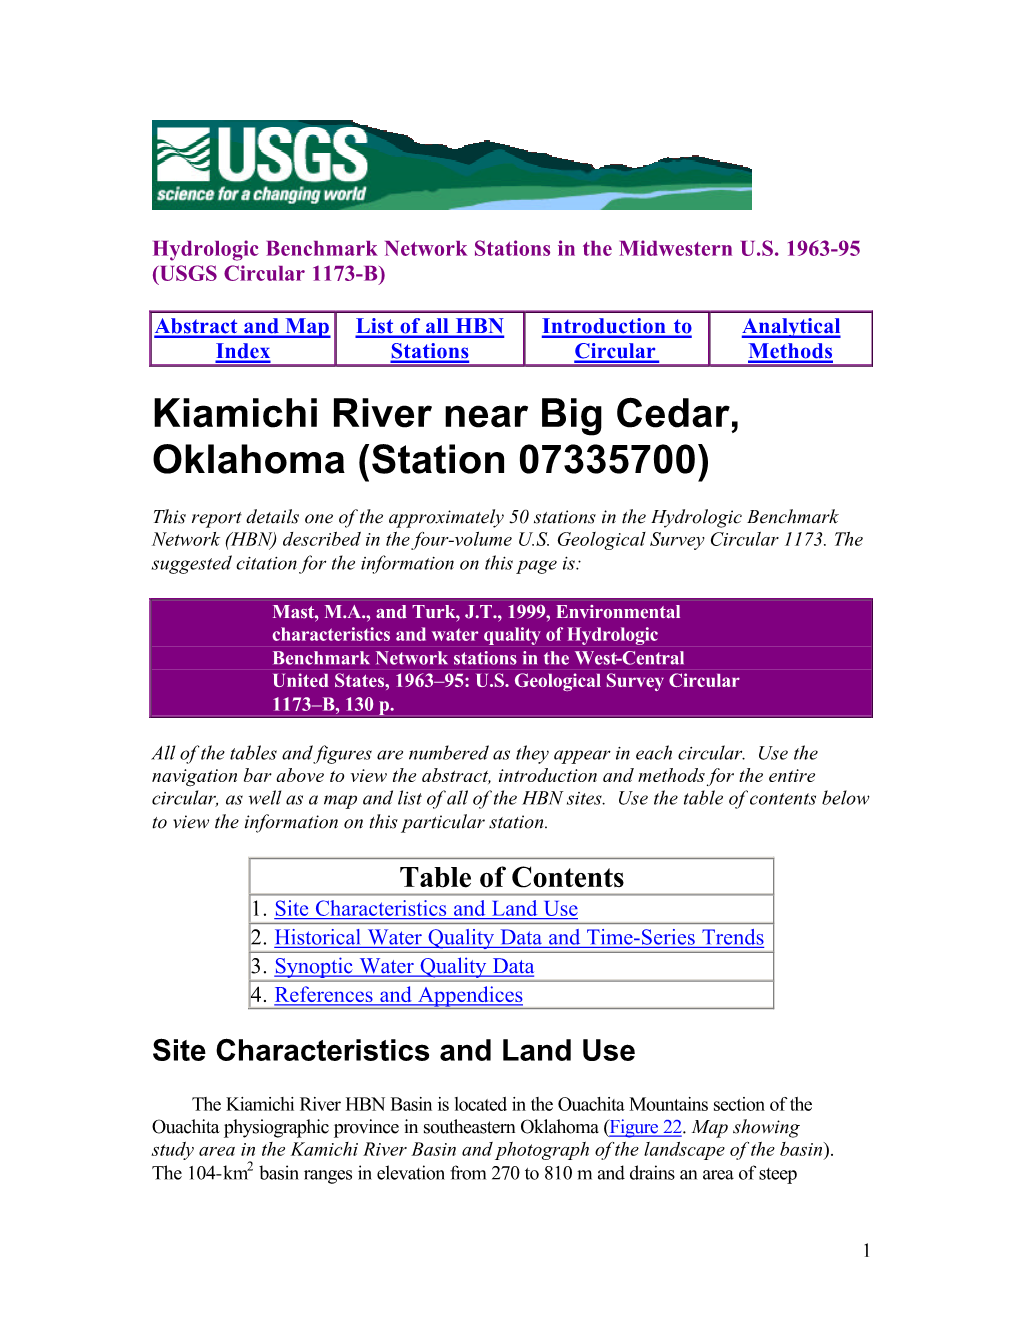 Kiamichi River Near Big Cedar, Oklahoma (Station 07335700)